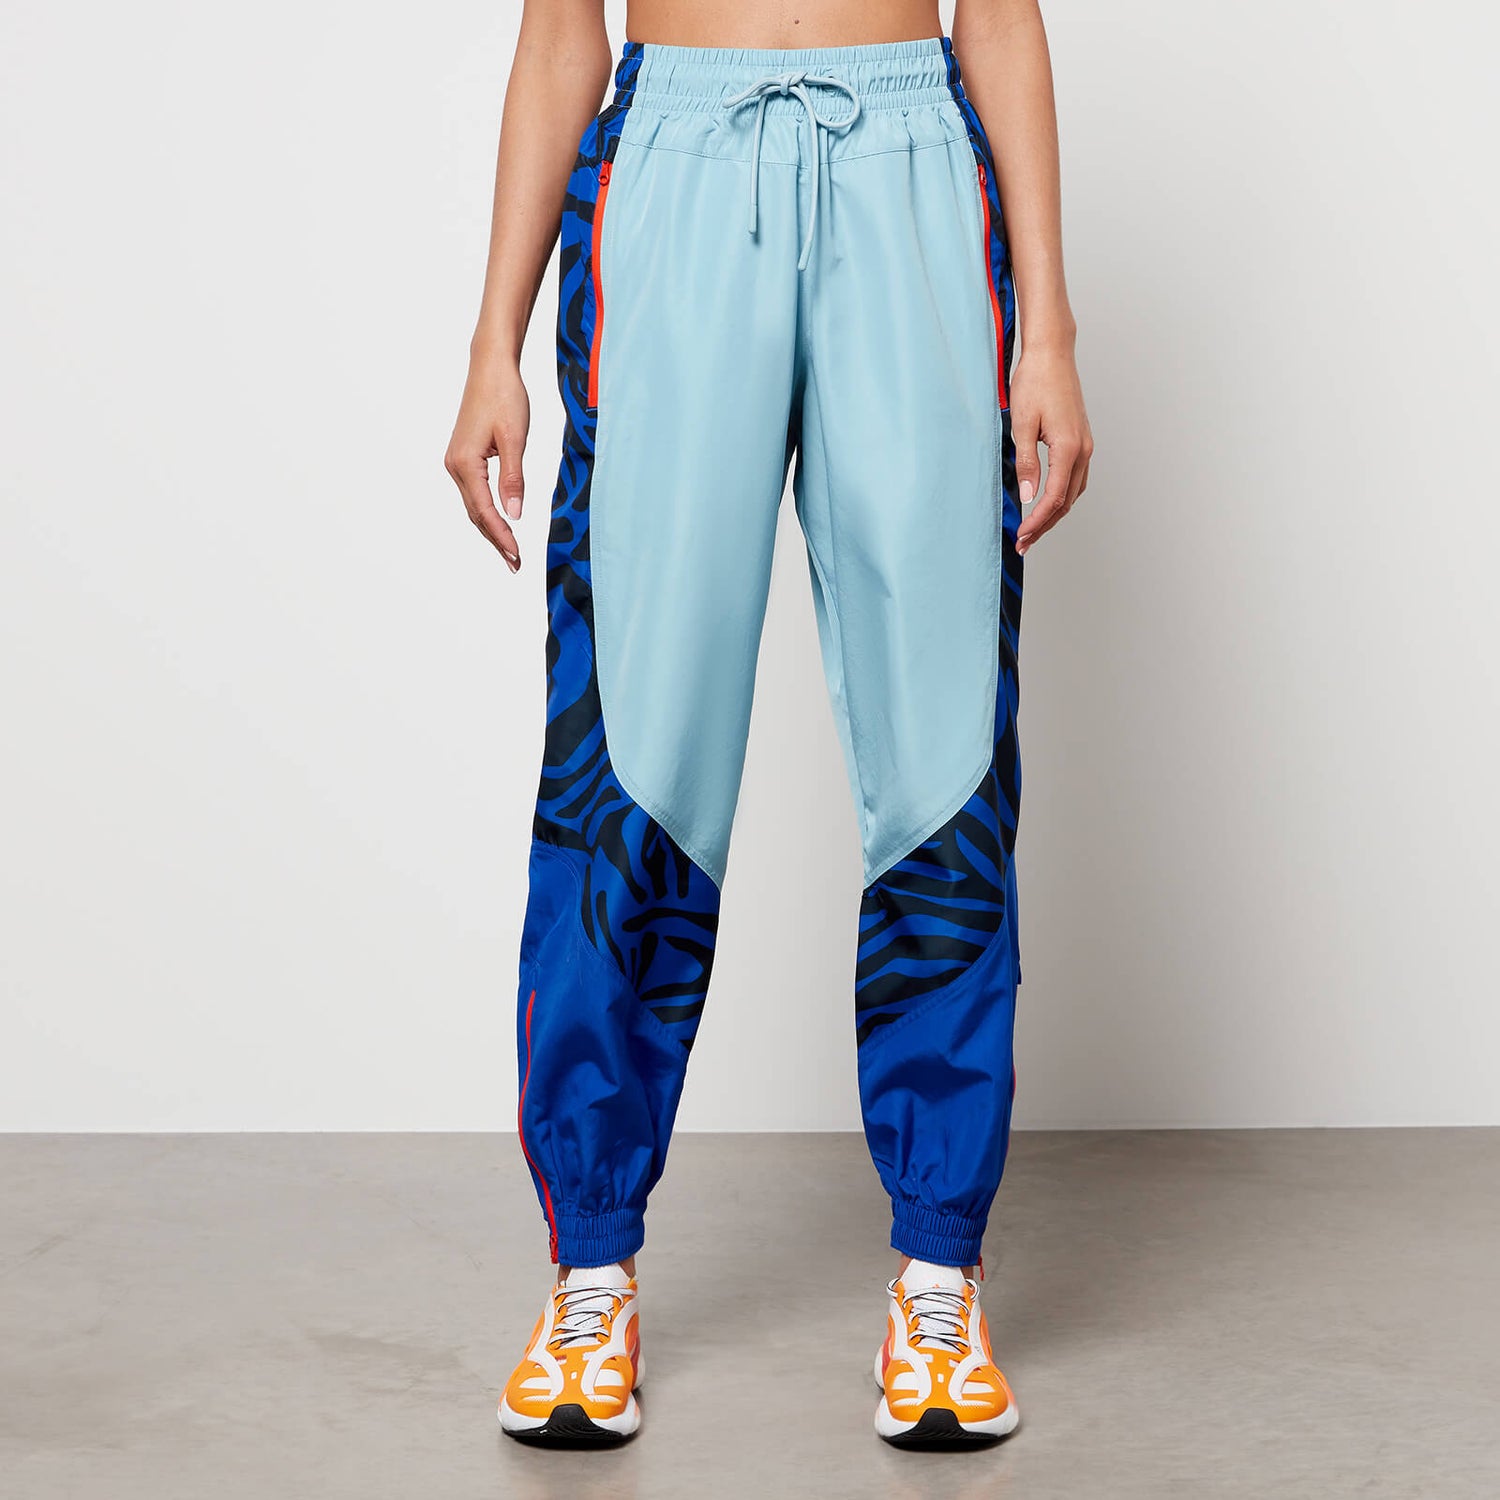 adidas by Stella McCartney Women's Track Pants - Blue - S